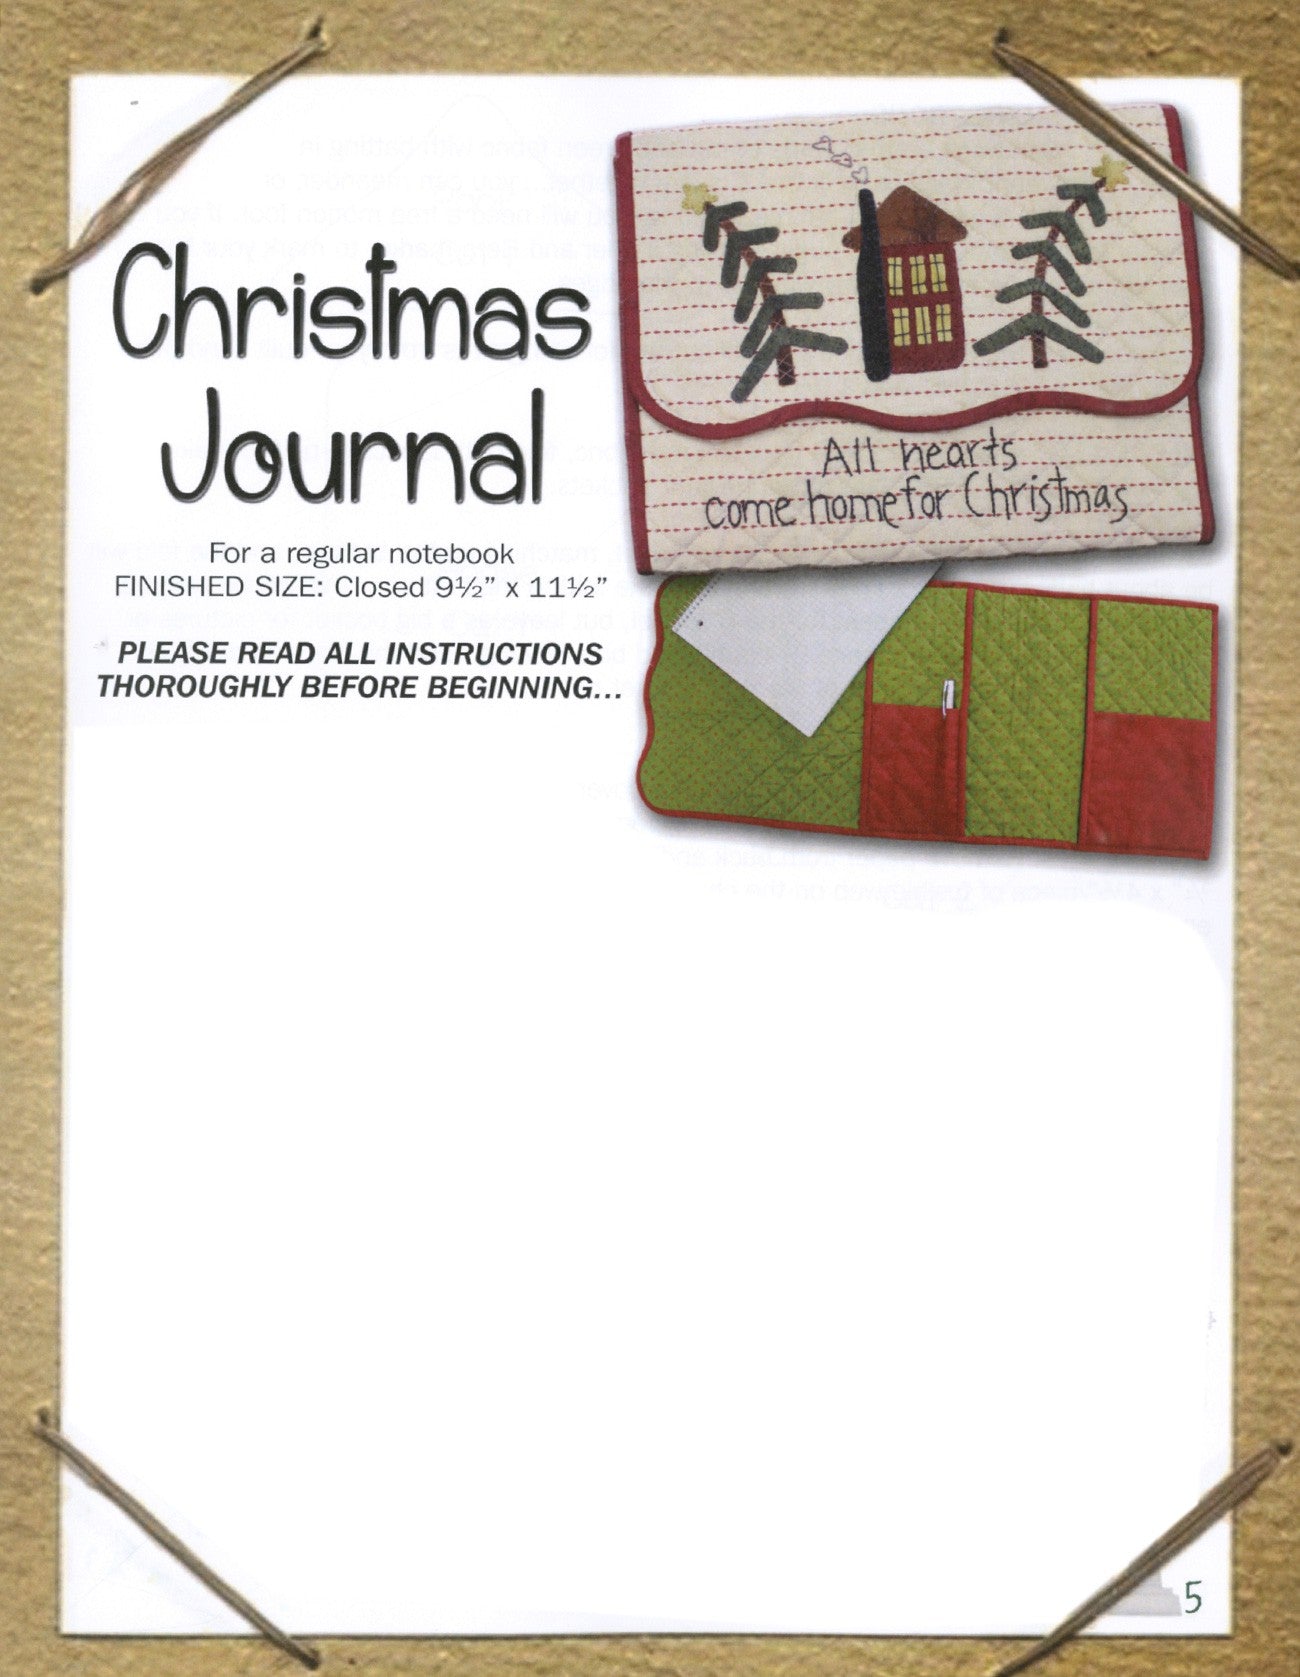 Christmas Gatherings Quilt Pattern Book by Lisa Bongean of Primitive Gatherings